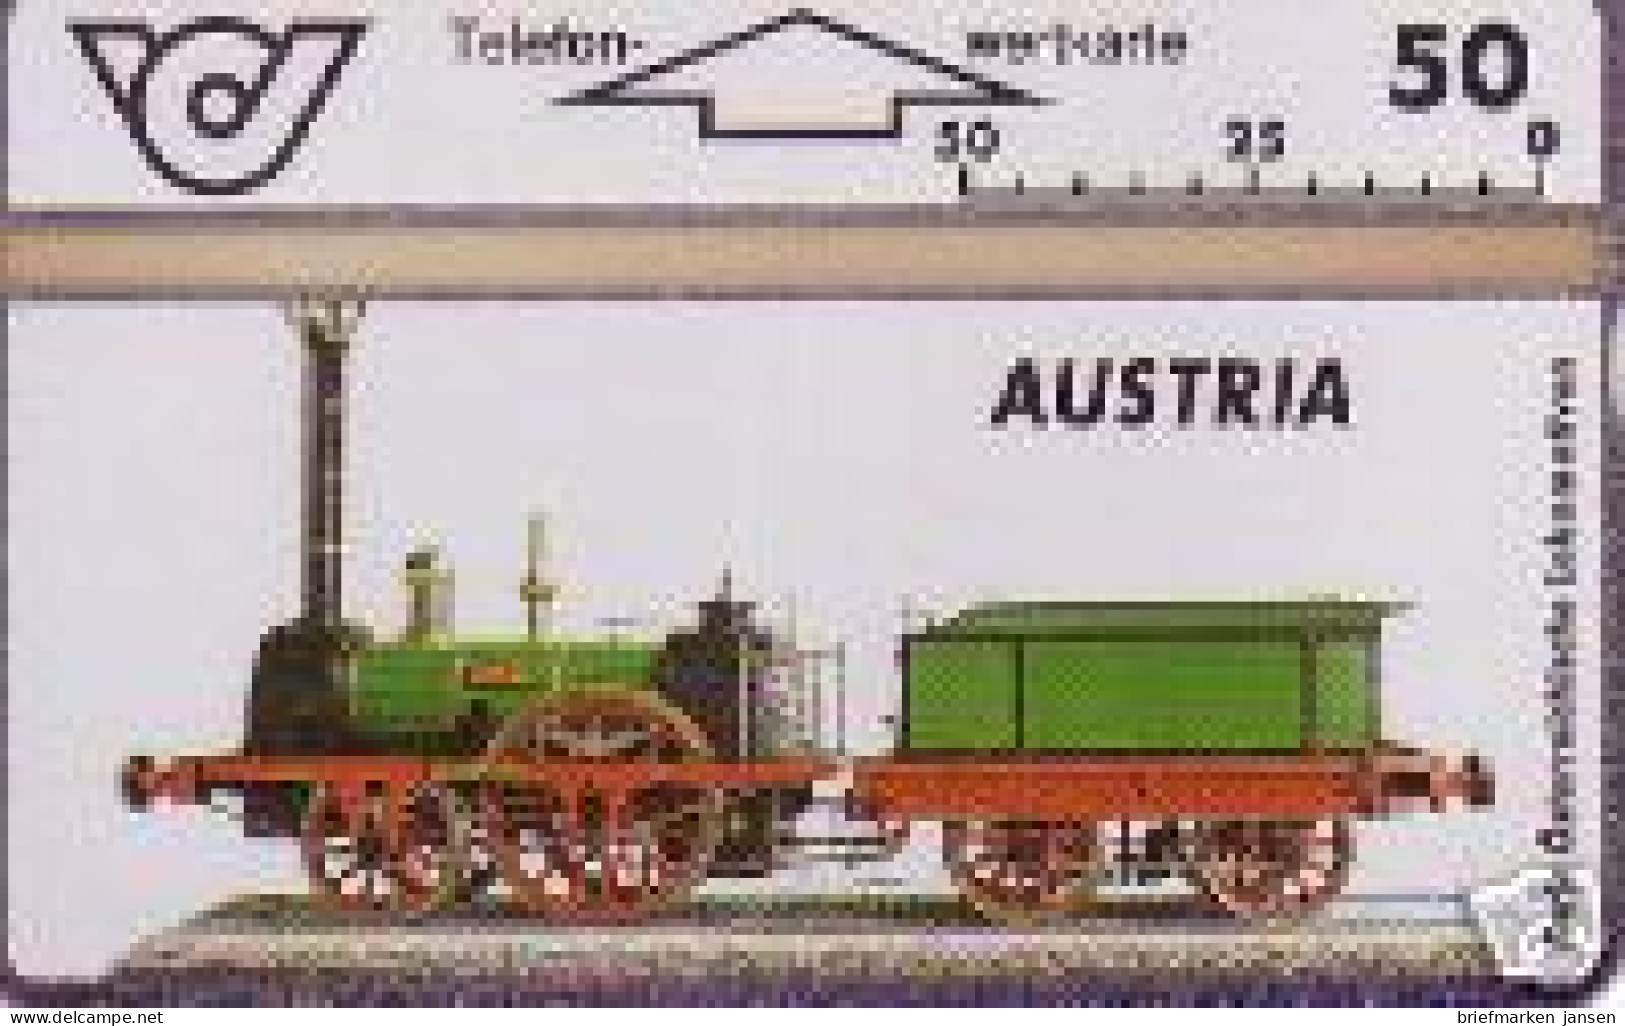 Telefonkarte Österreich, Lokomotiven, Austria, 50 - Non Classés